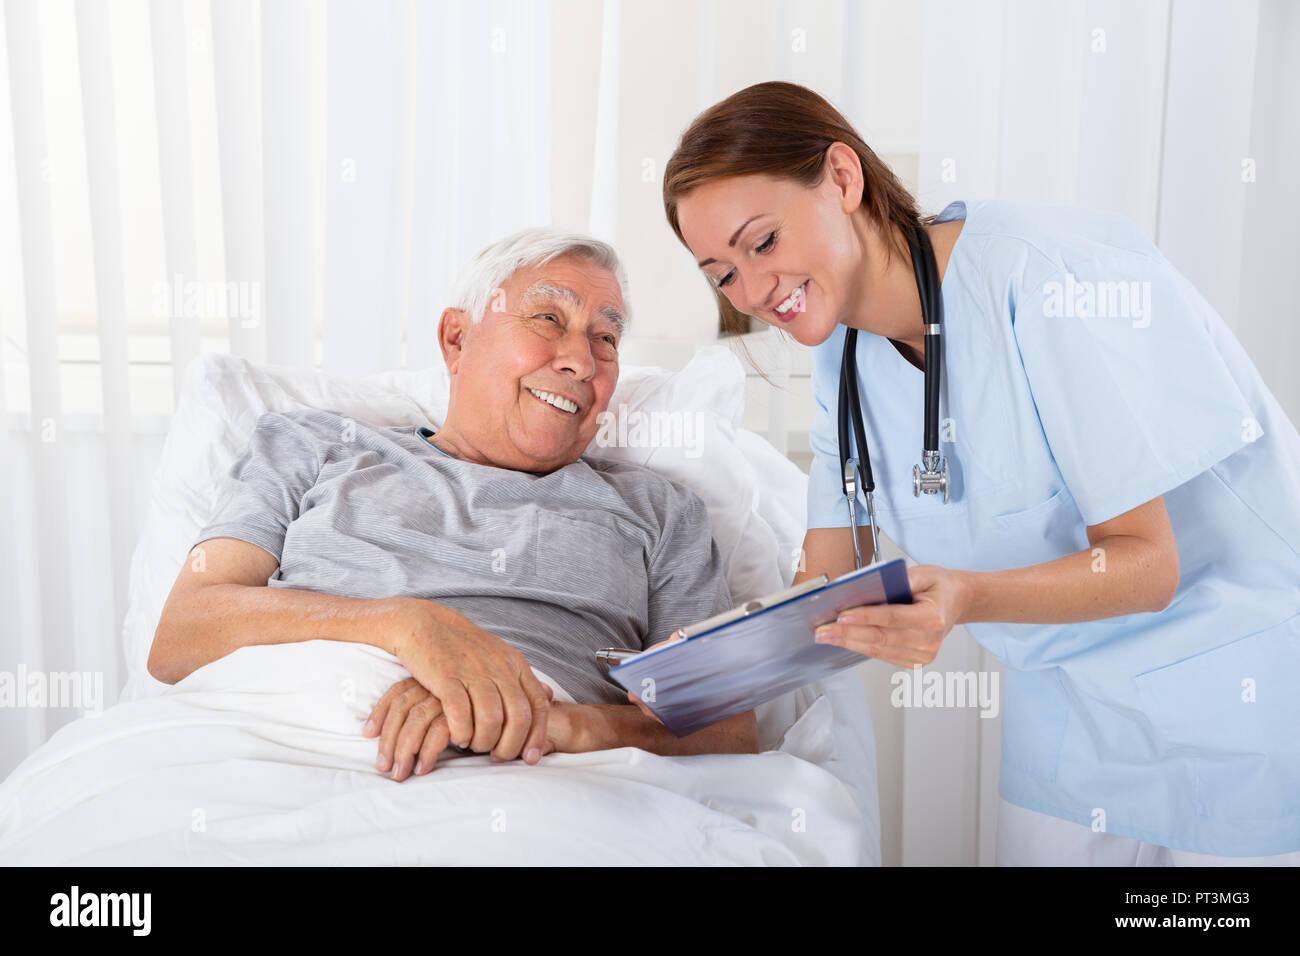 Беседа с родственниками пациента. Разговор медсестры с пациенто. Беседа медсестры с пациентом. Медсестра улыбается пациенту. Беседа врача с родственниками.